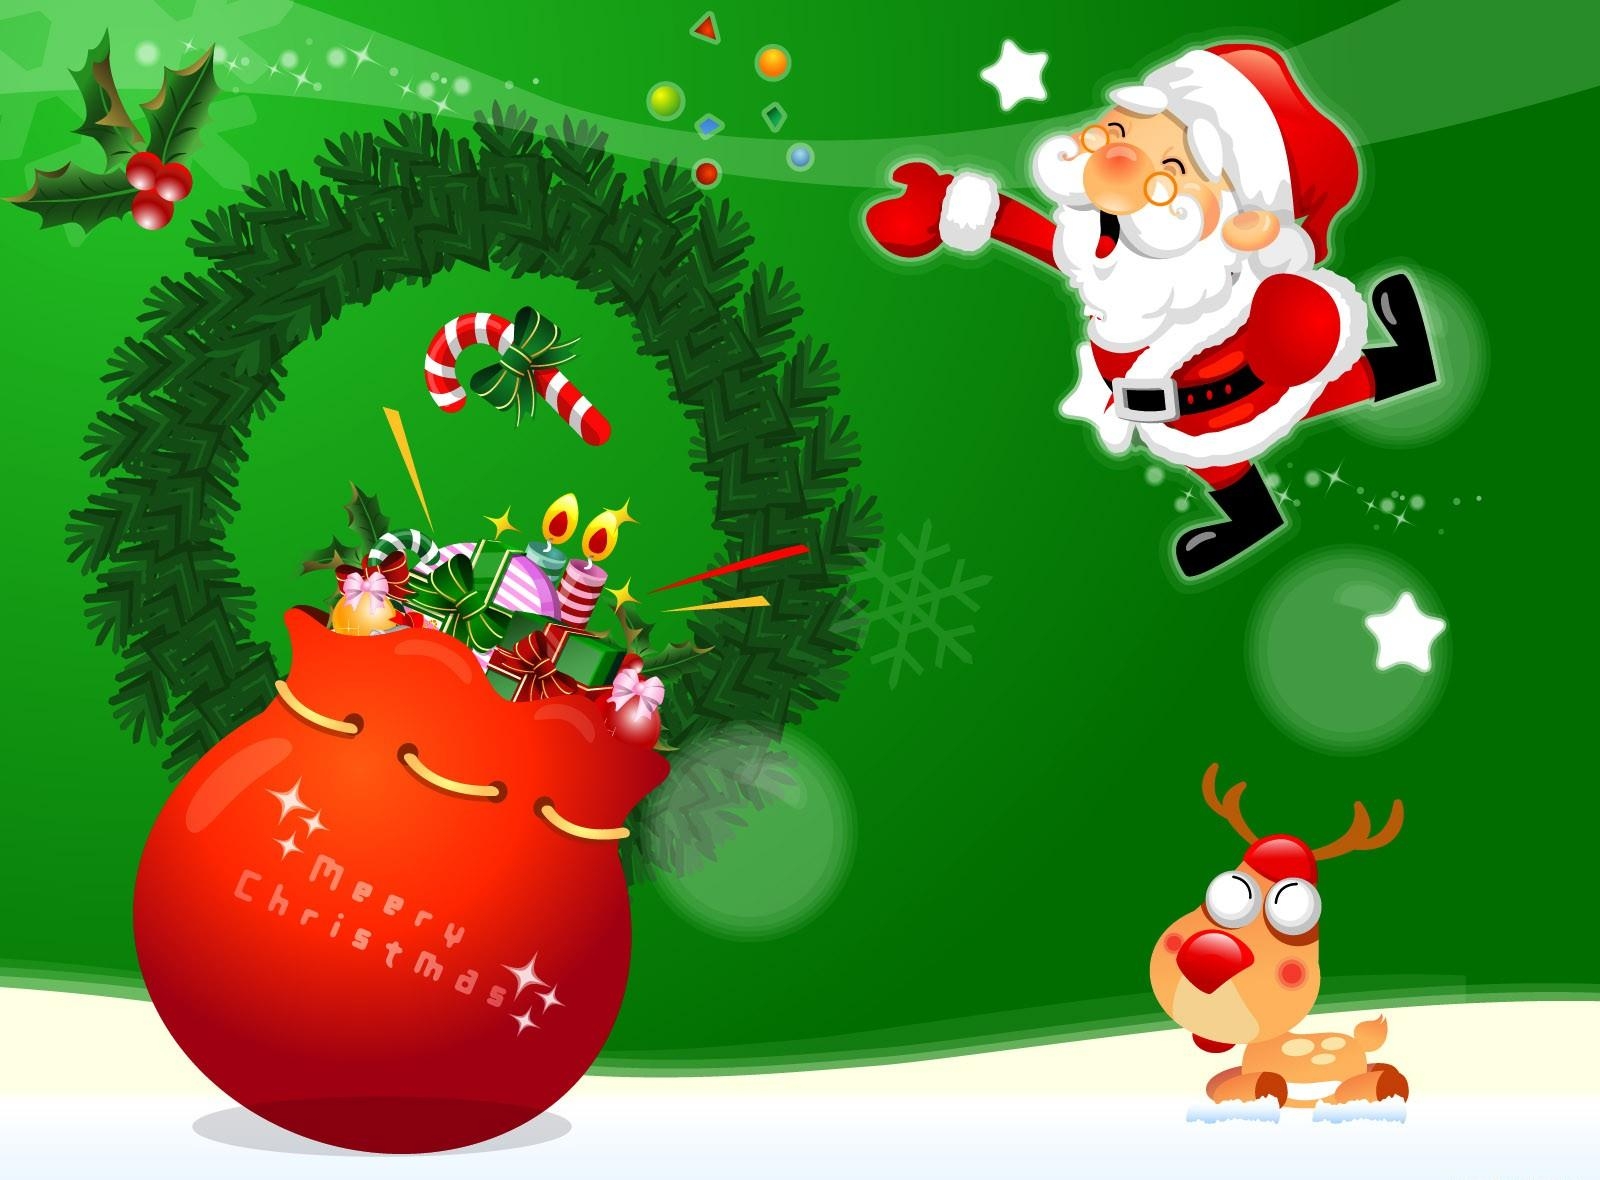 santa claus, holidays, deer, bag, wreath, sack, presents, gifts